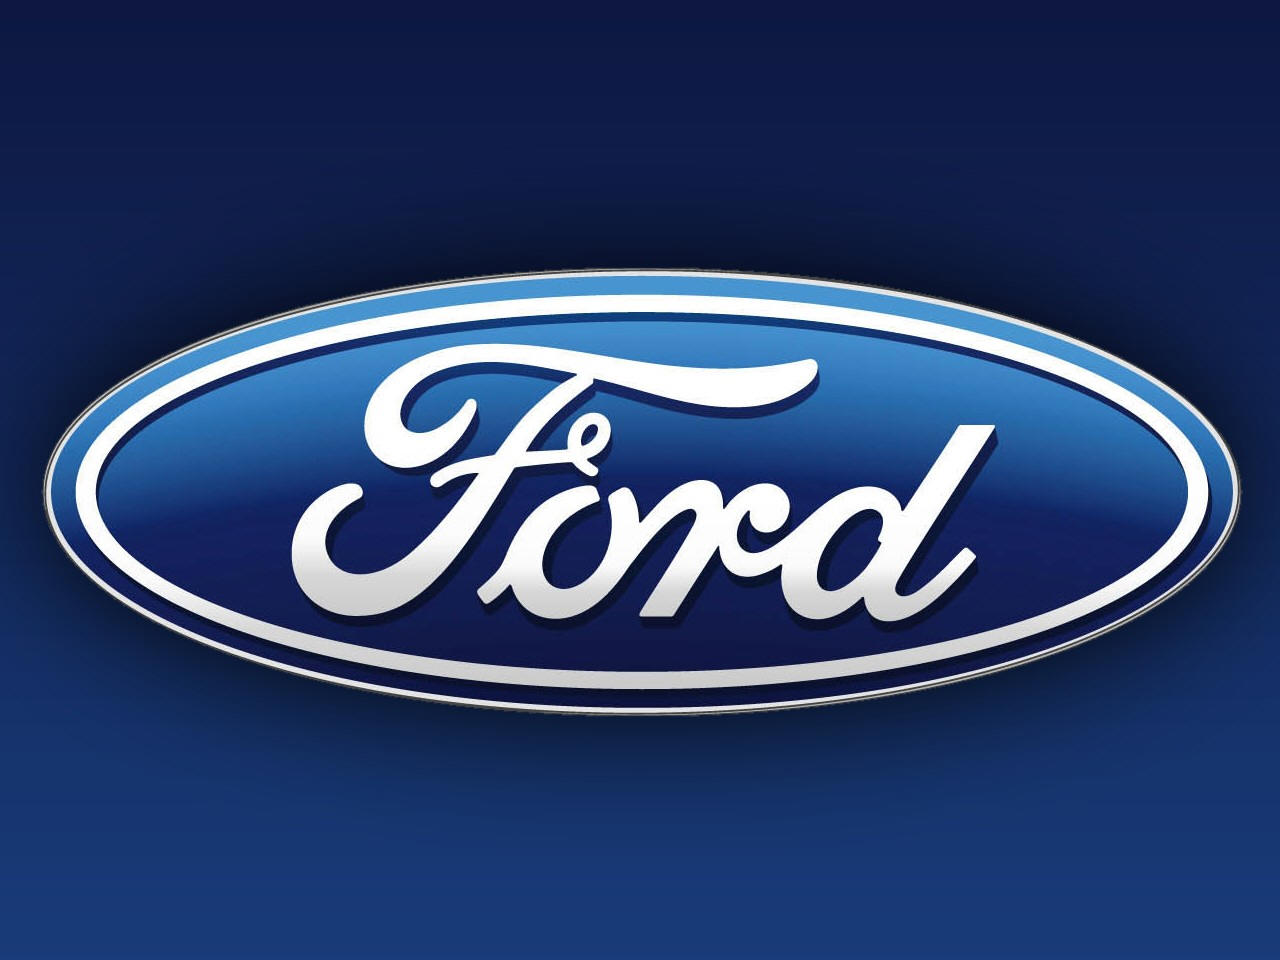 Ford slogans 2011 #4